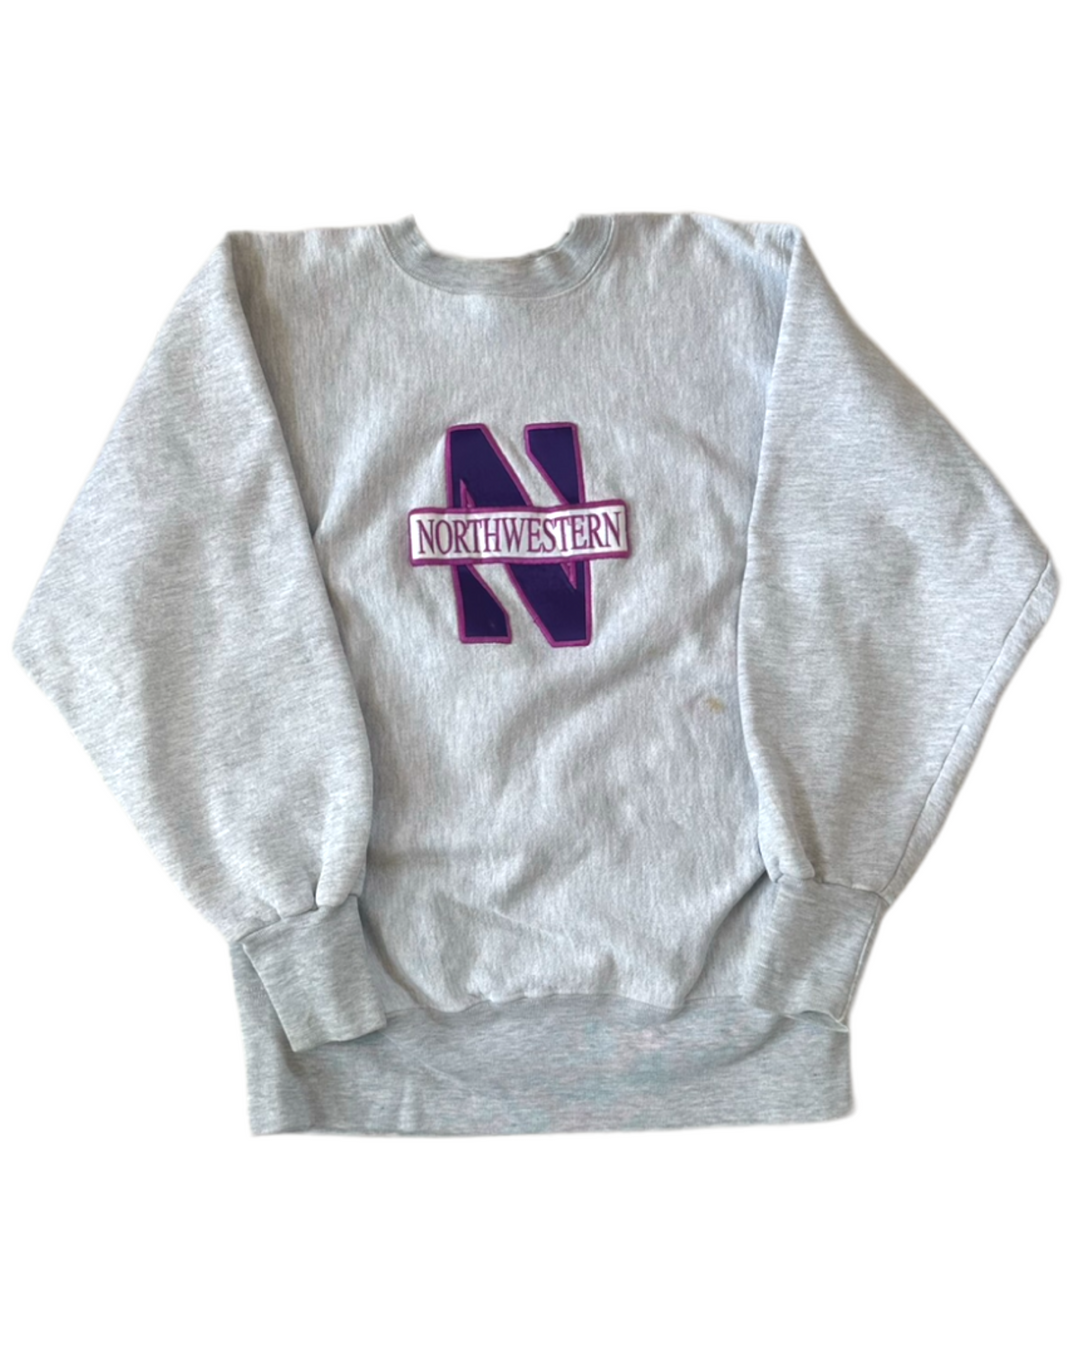 Northwestern Vintage Sweatshirt